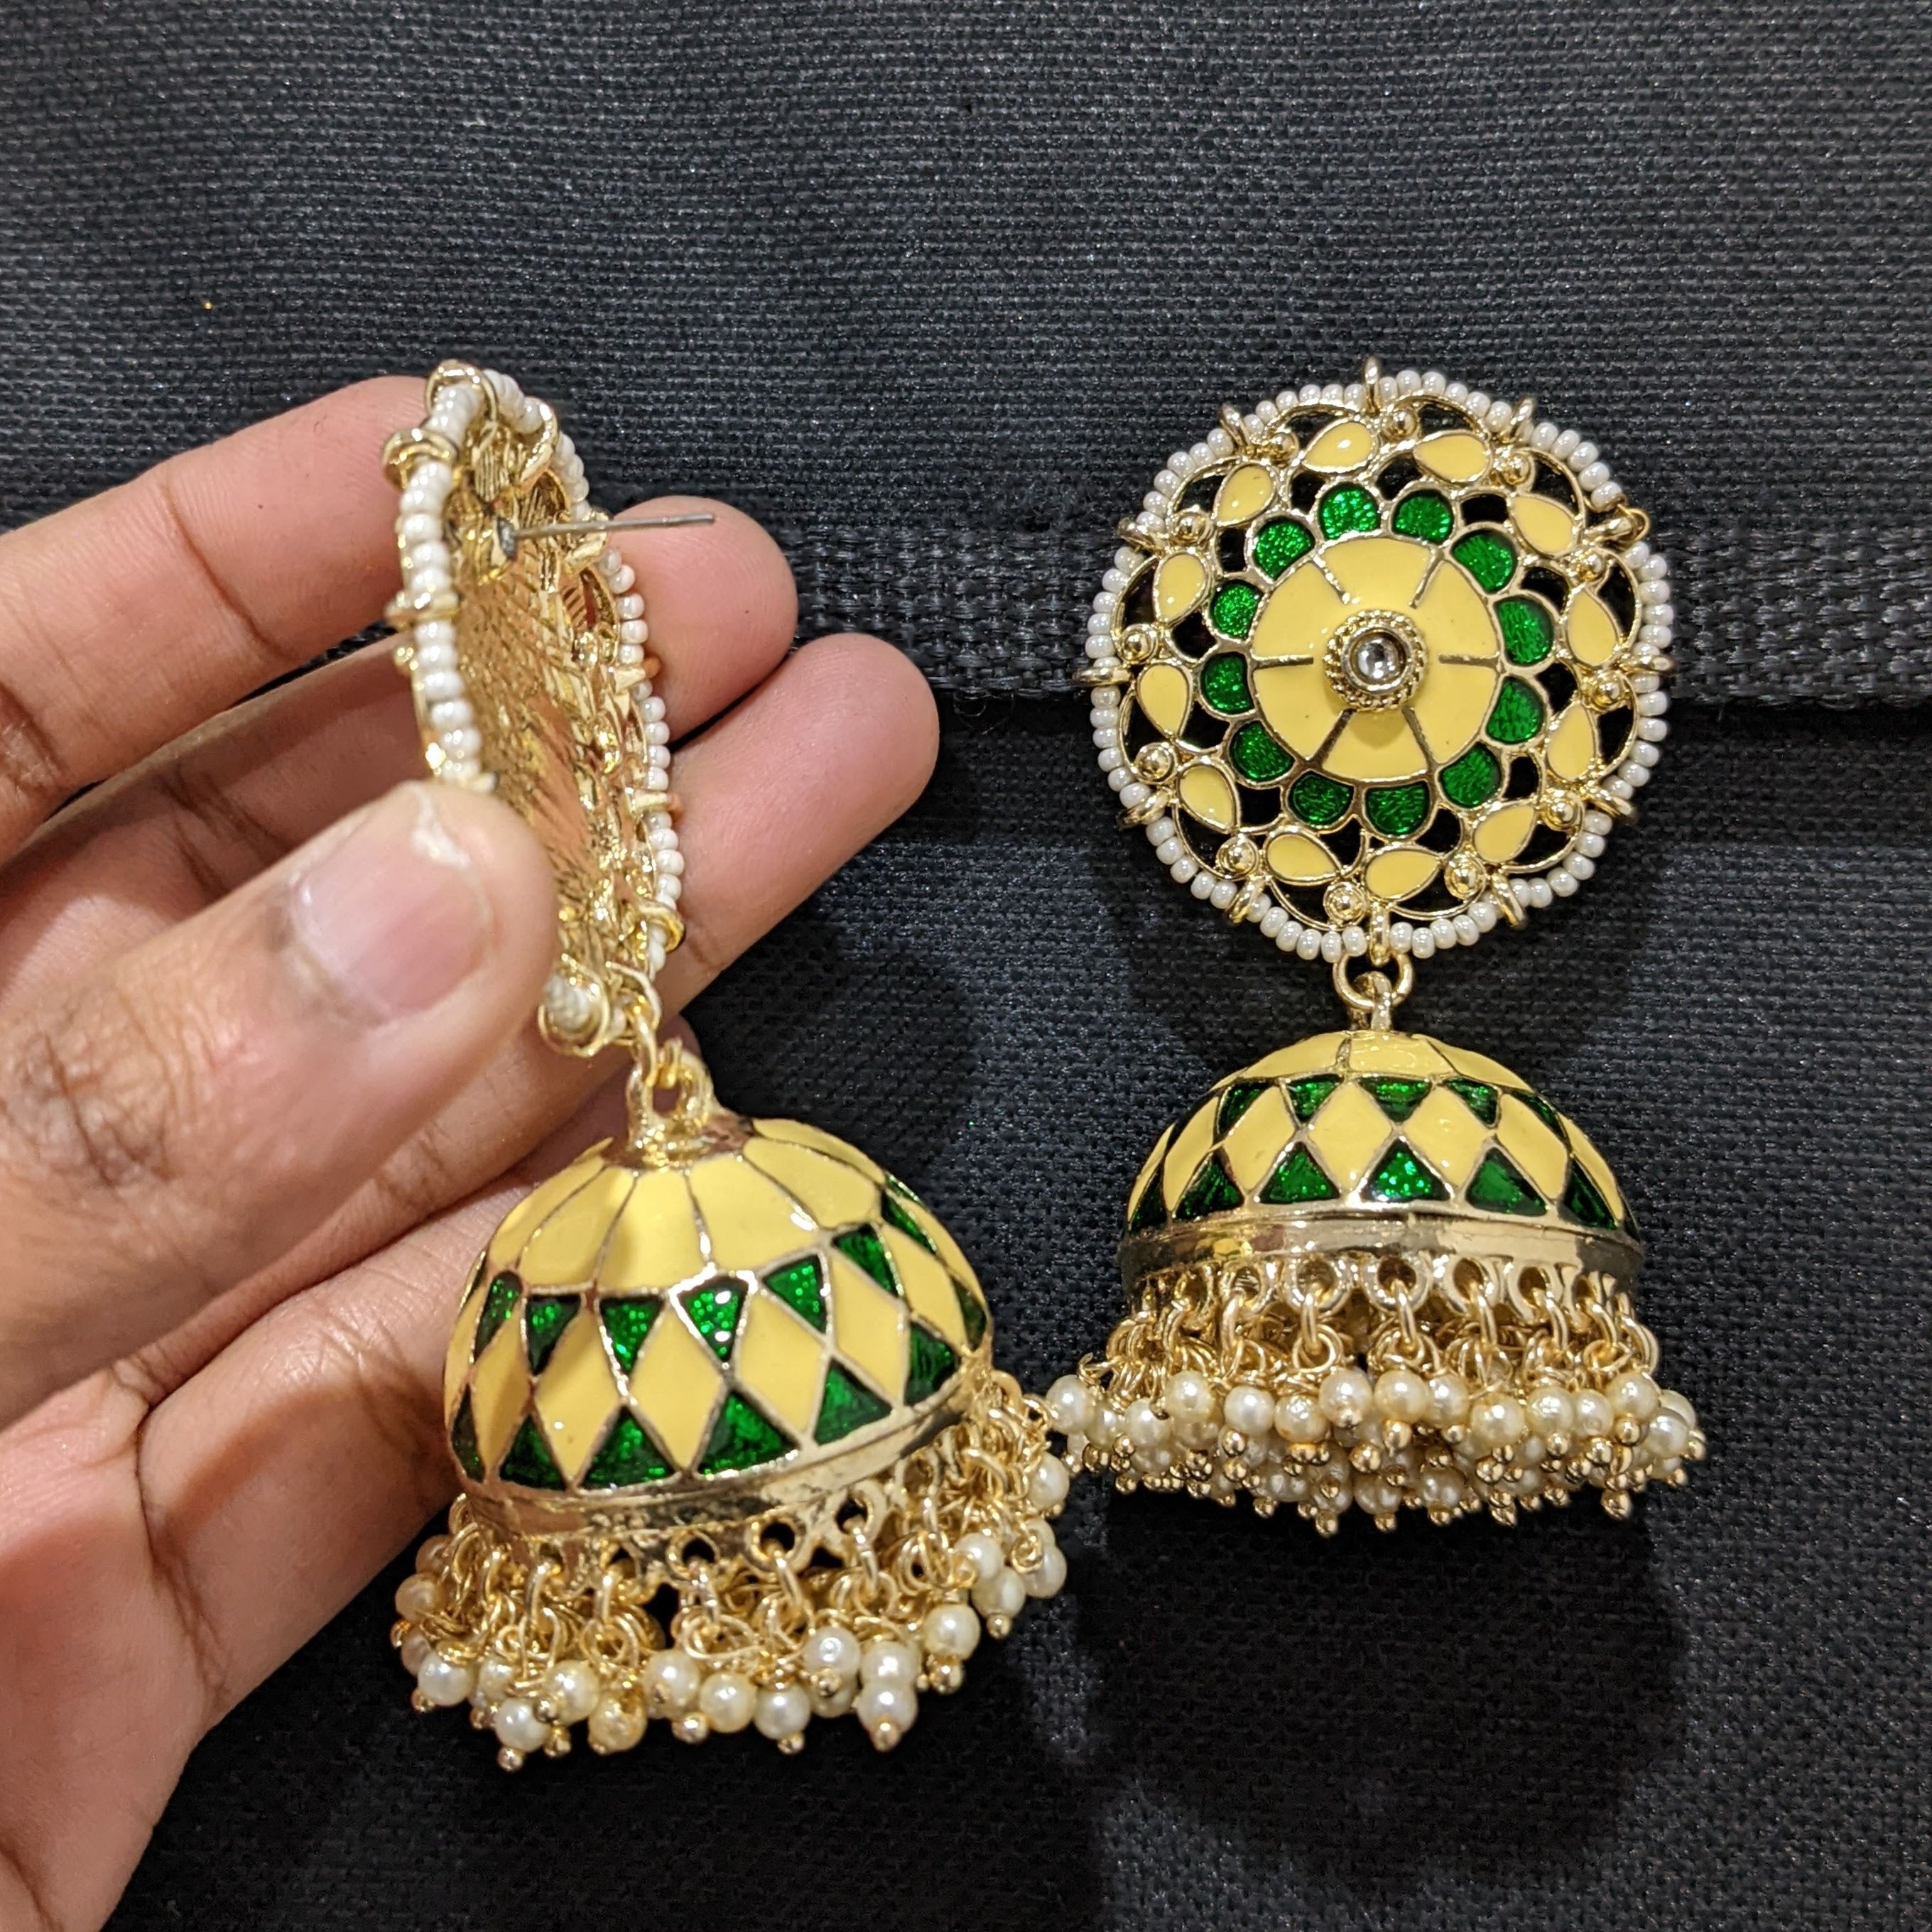 Stilla stud earrings, Pear cut, Green, Gold-tone plated | Swarovski